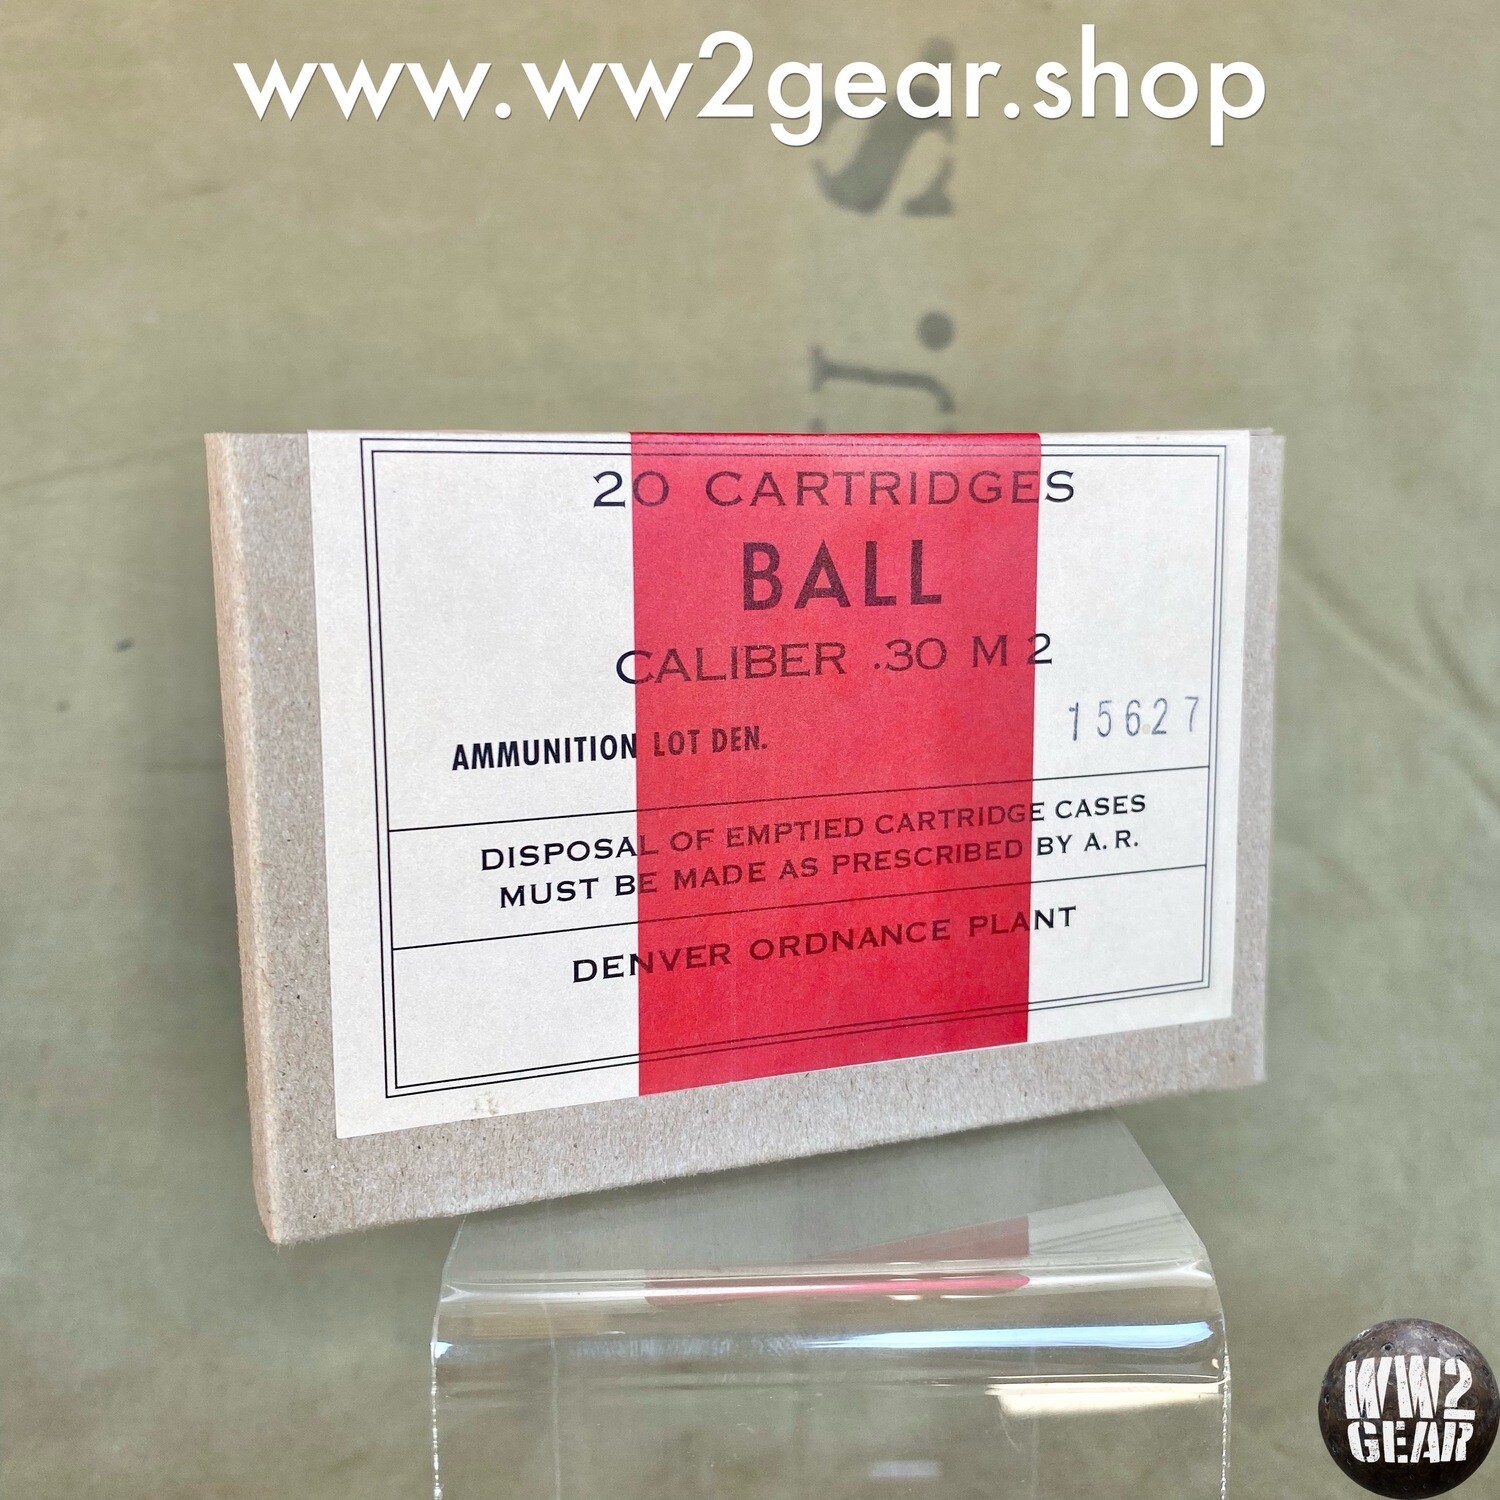 Caliber .30 M2 Ball 20 Cartridges Ammo Box (Reproduction)